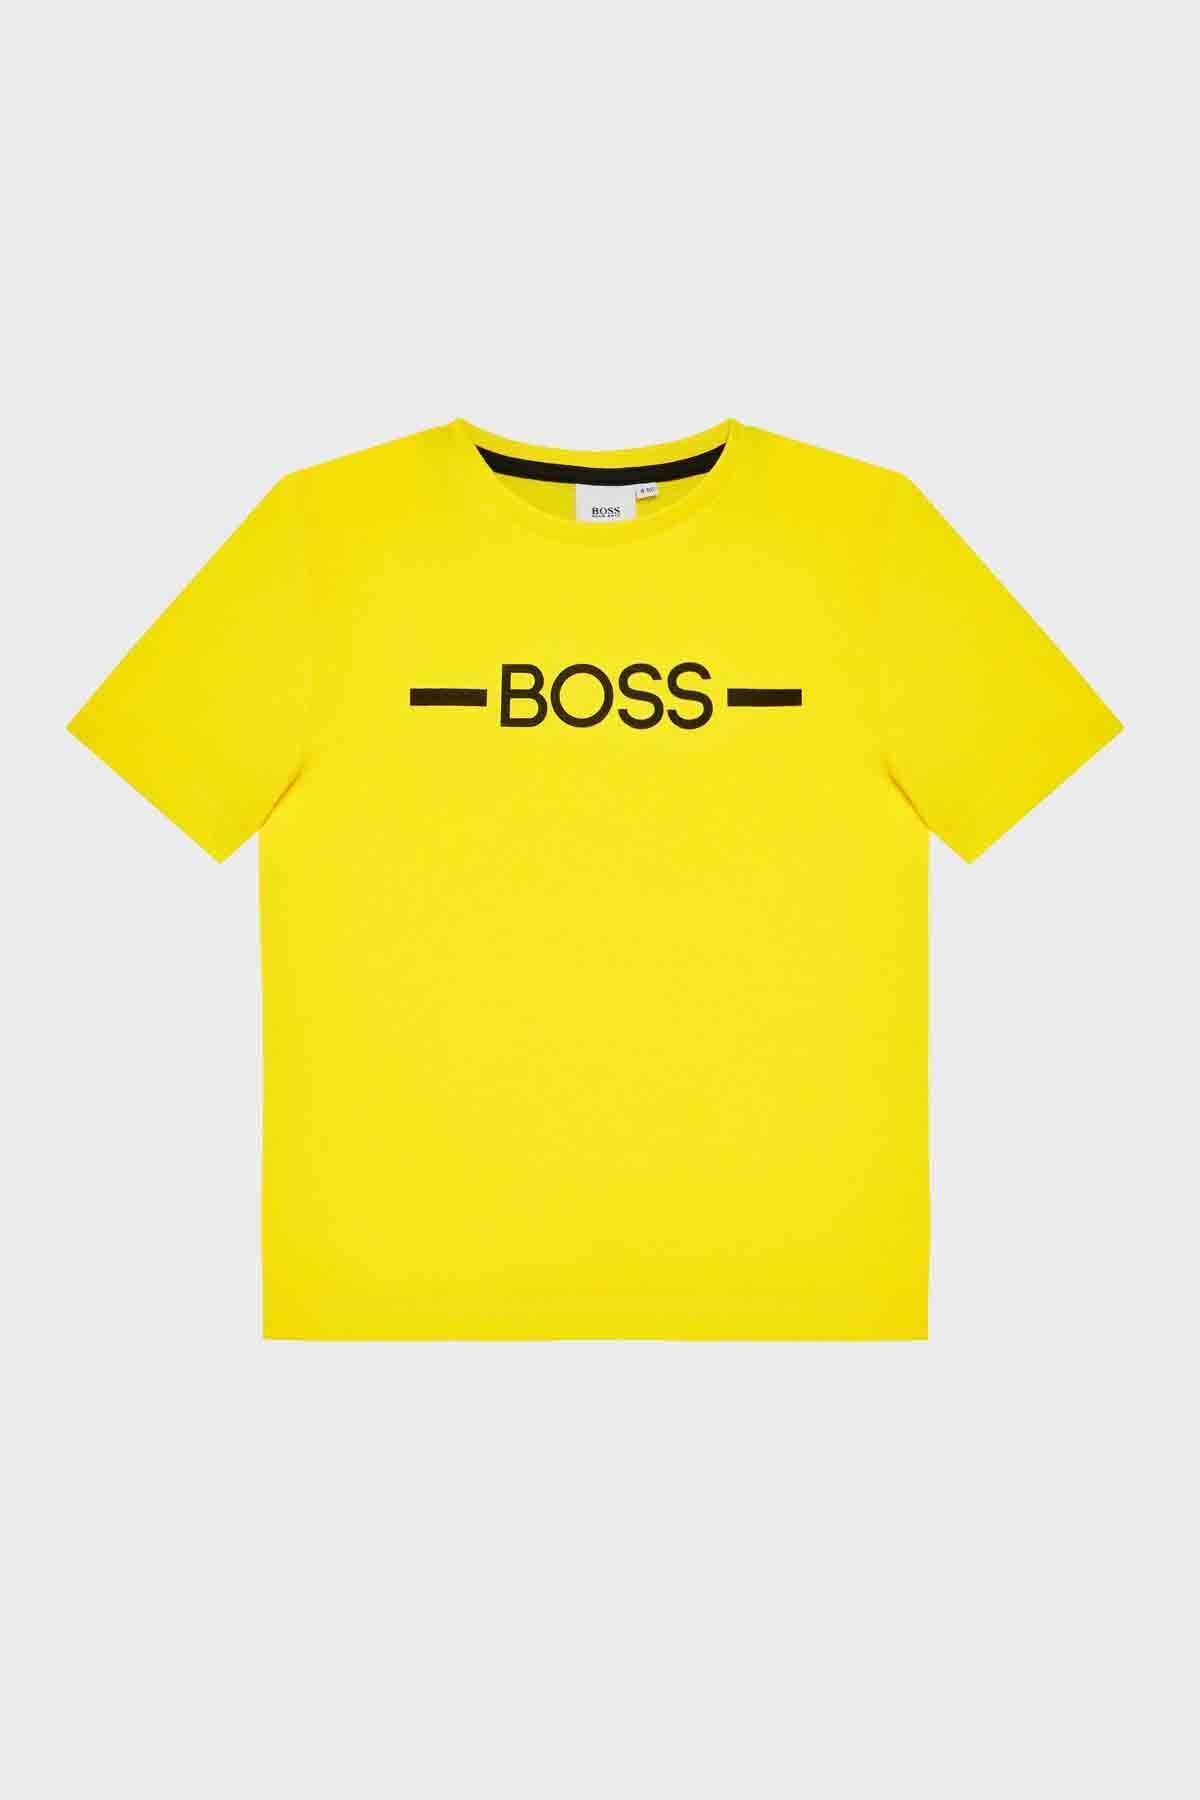 Hugo Boss Pamuklu Bisiklet Yaka Çocuk T Shirt T SHİRT 25G97/553 YELLOW